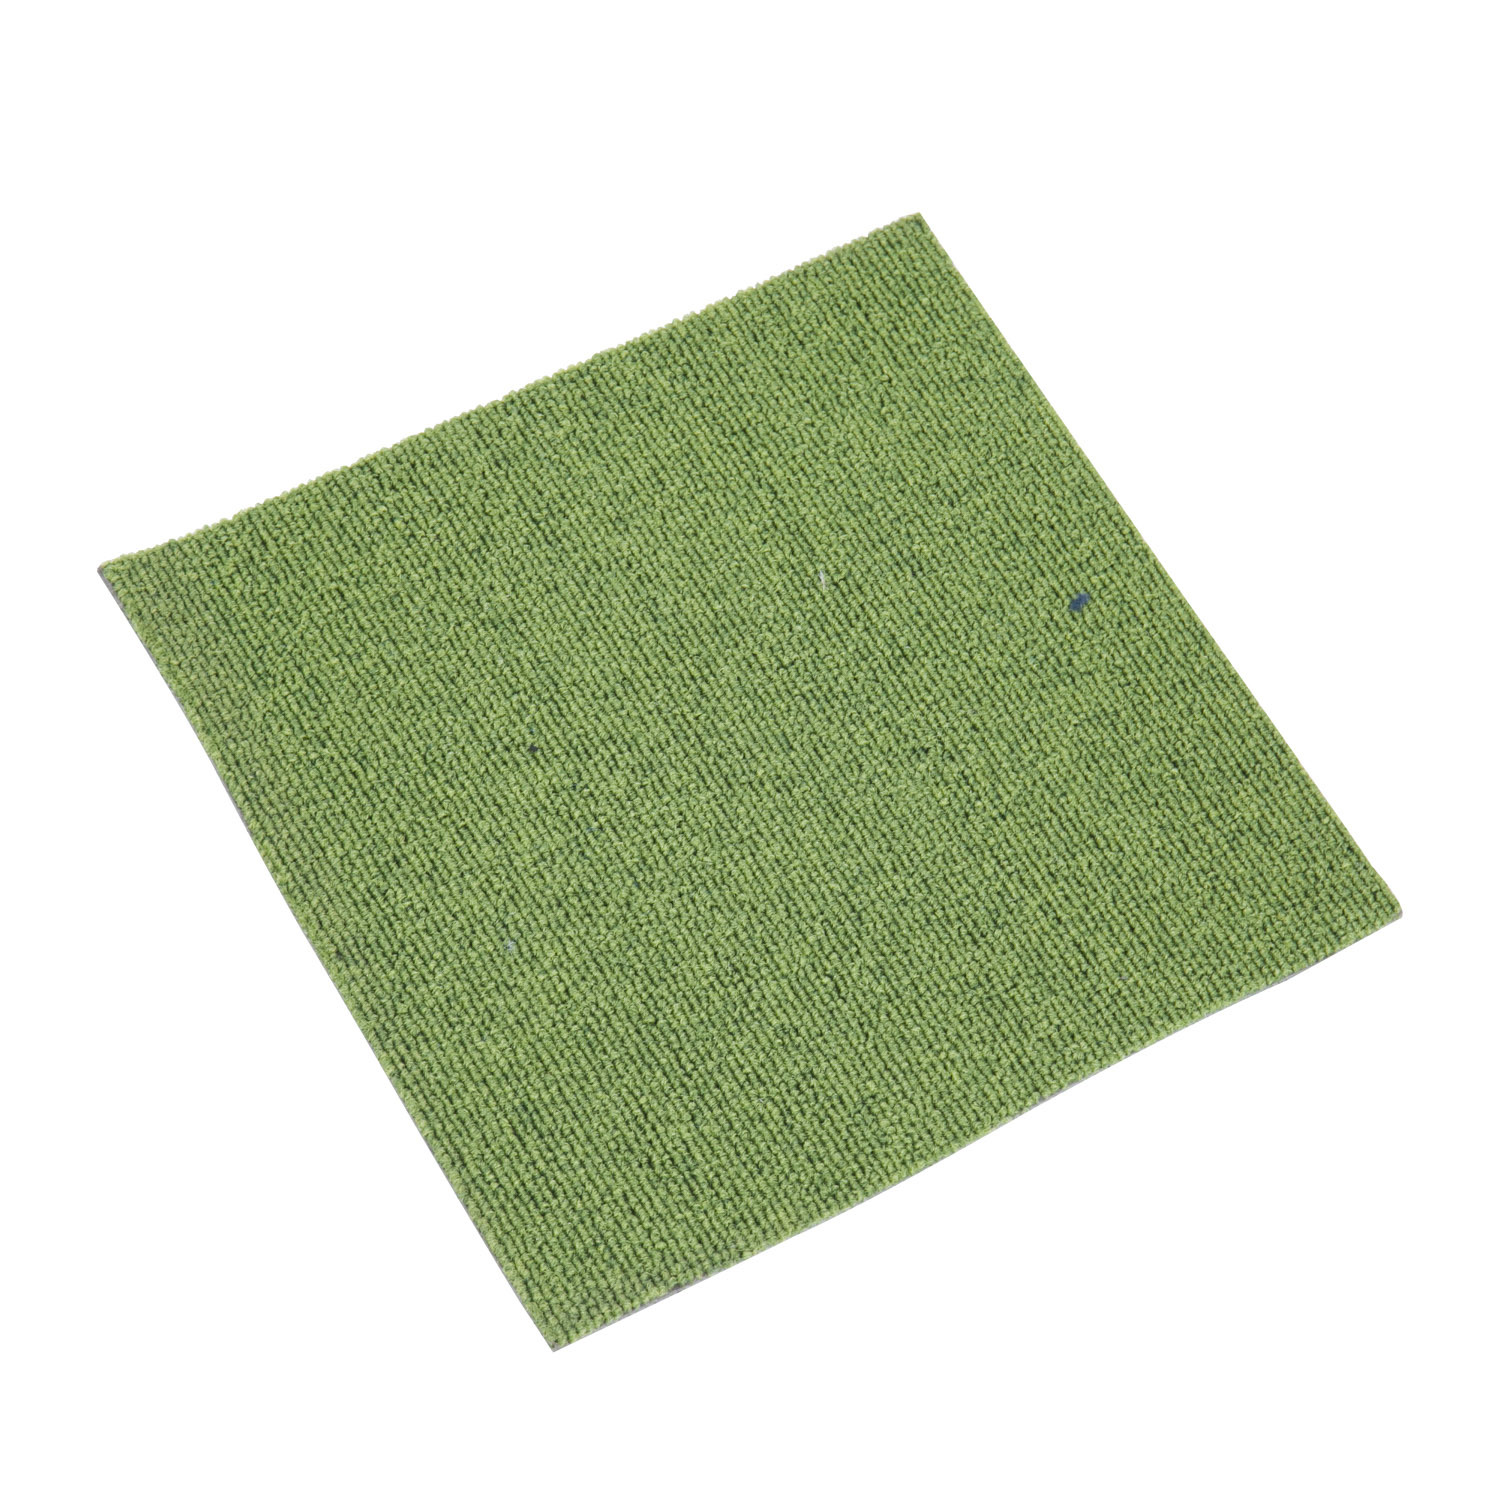 Azulejos de alfombra de calidad impermeable al aire libre